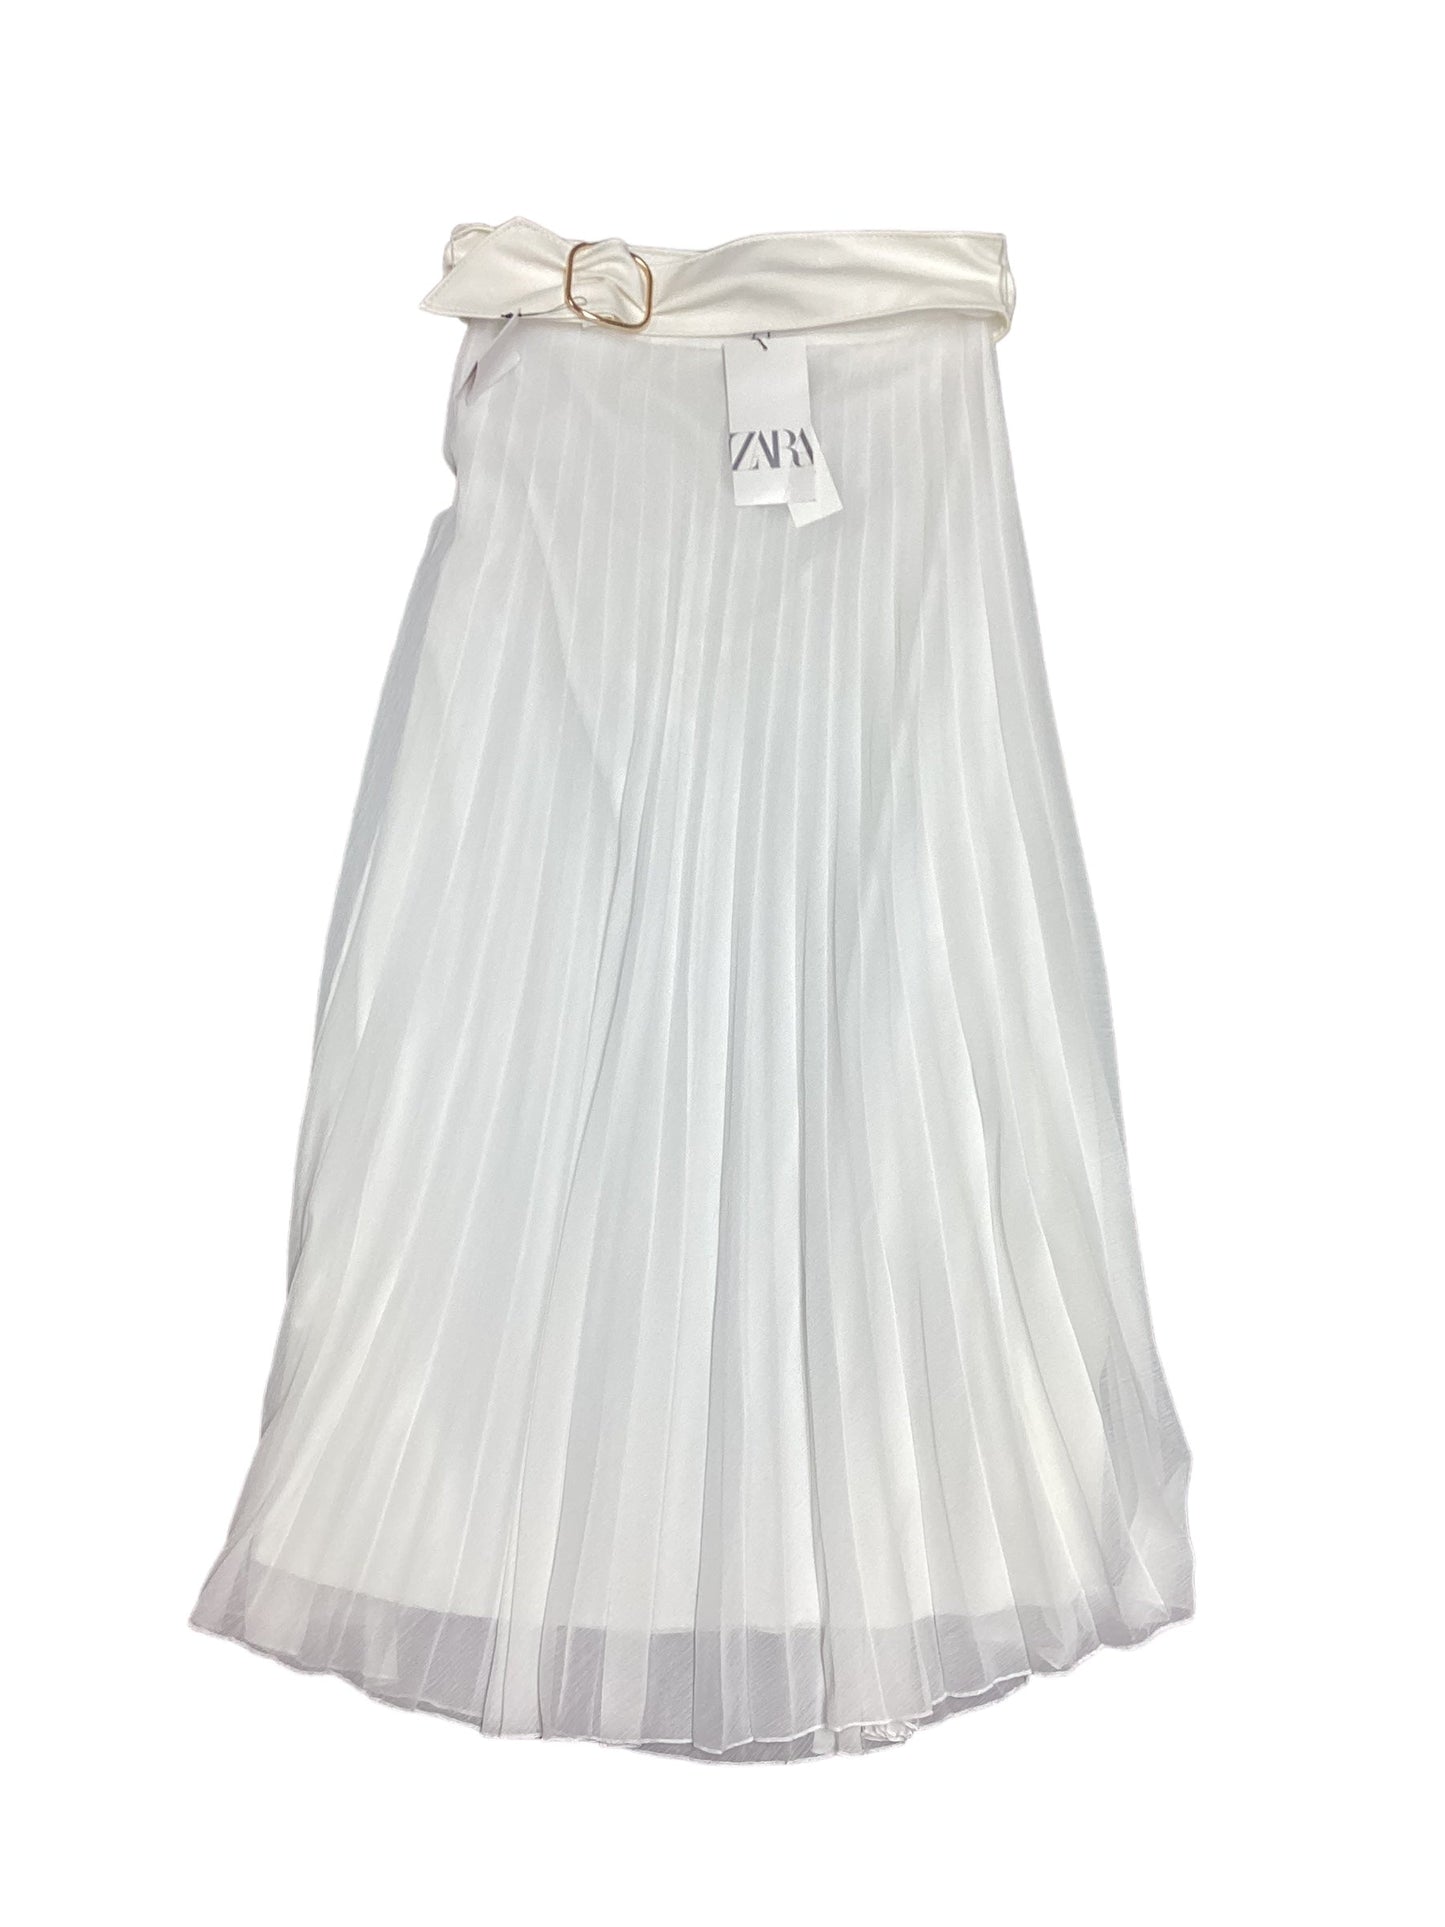 White Skirt Maxi Zara, Size M